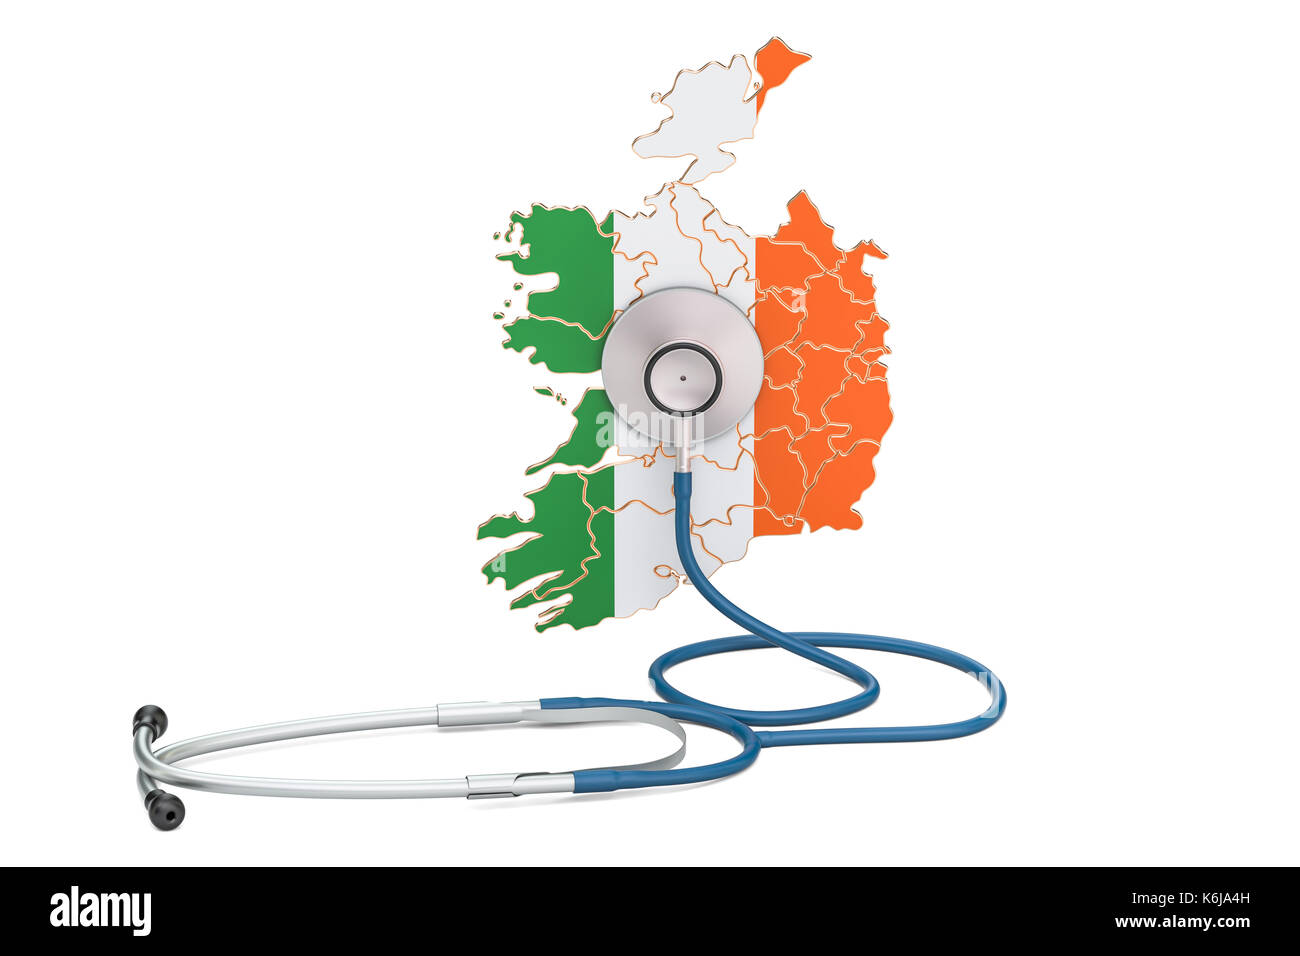 Irische Karte mit Stethoskop, national Health Care Concept, 3D-Rendering Stockfoto